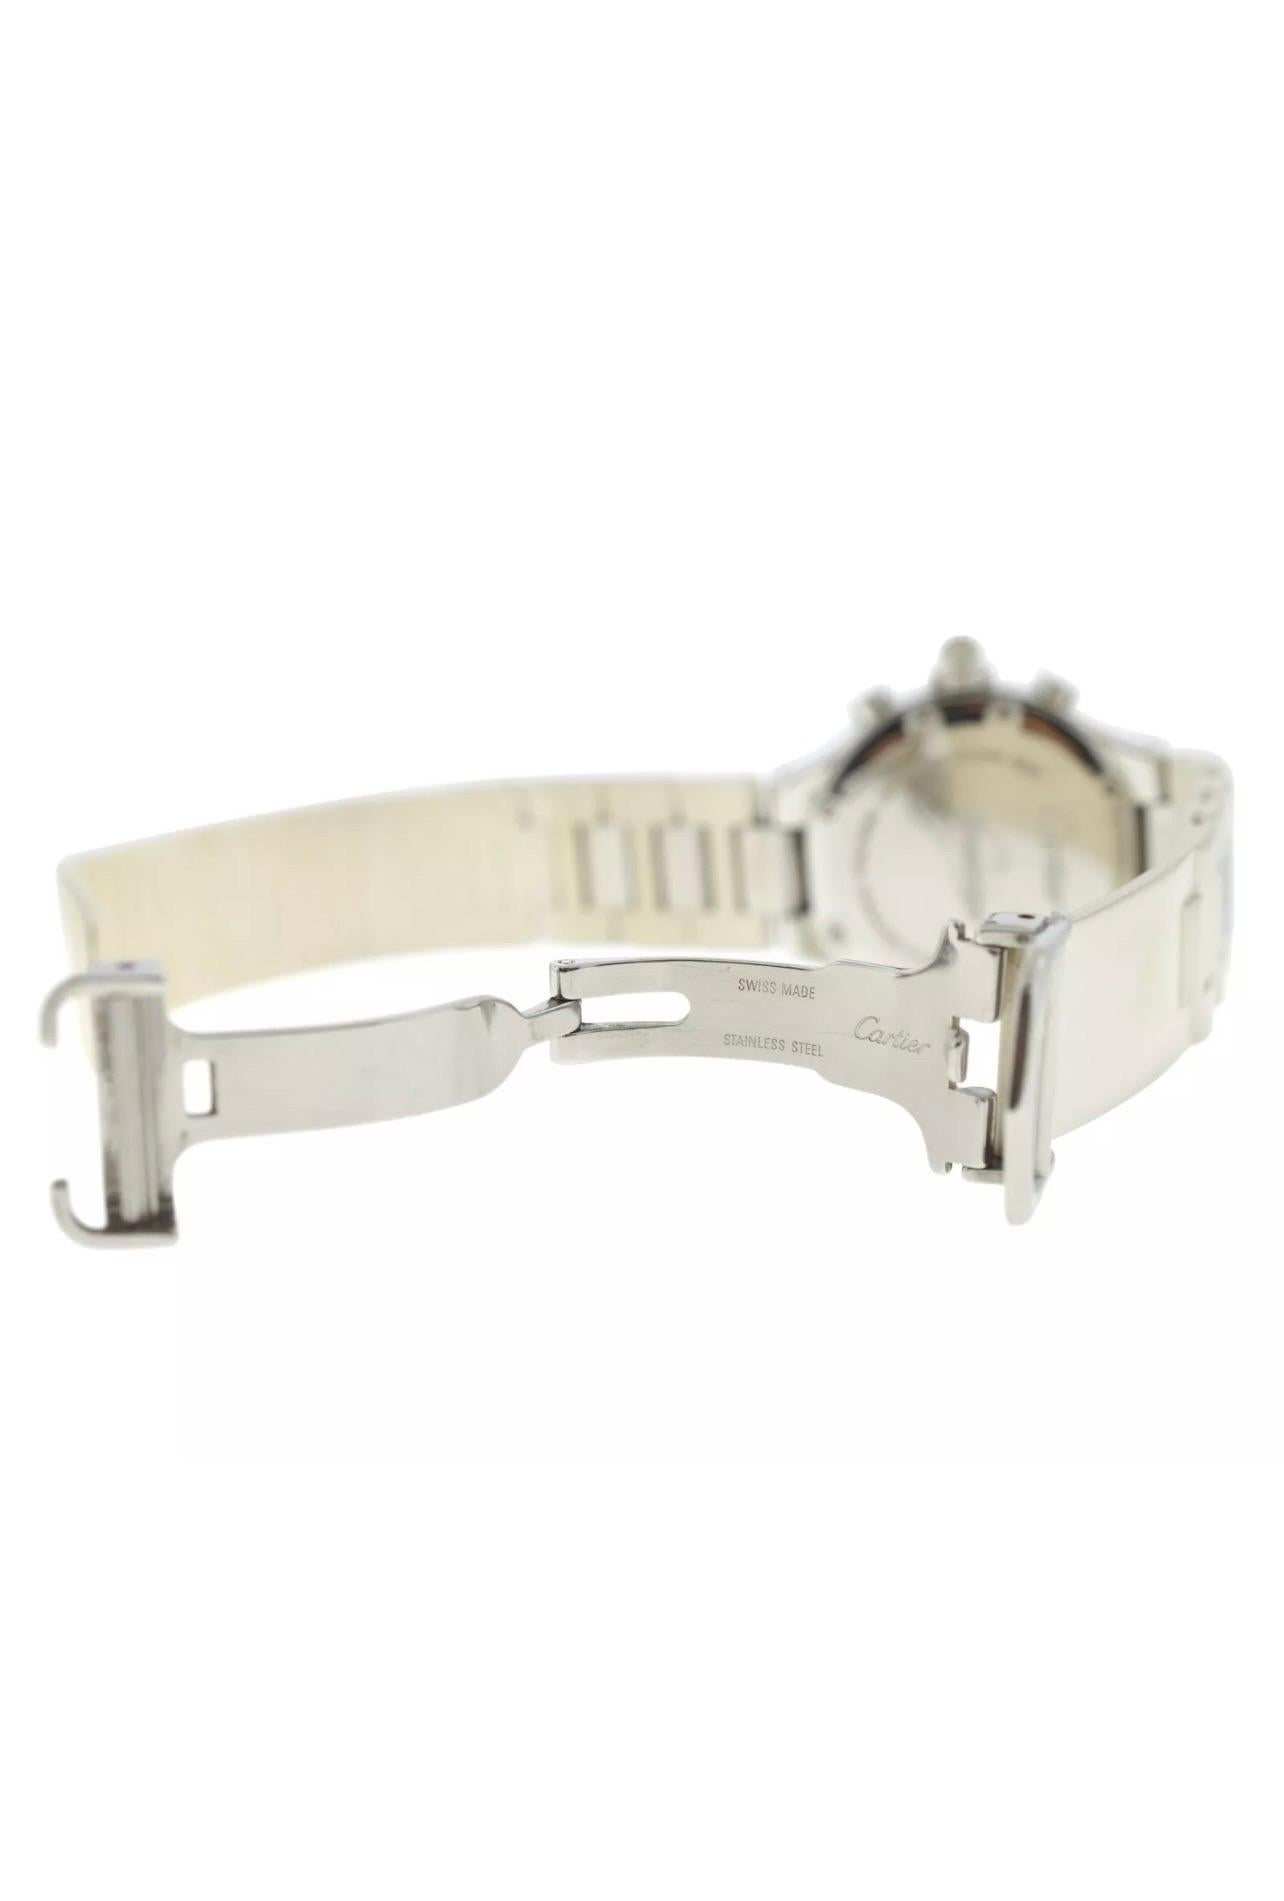 Cartier Chronoscaph Cream Women's Rubber Strap Watch, 2996 For Sale 5